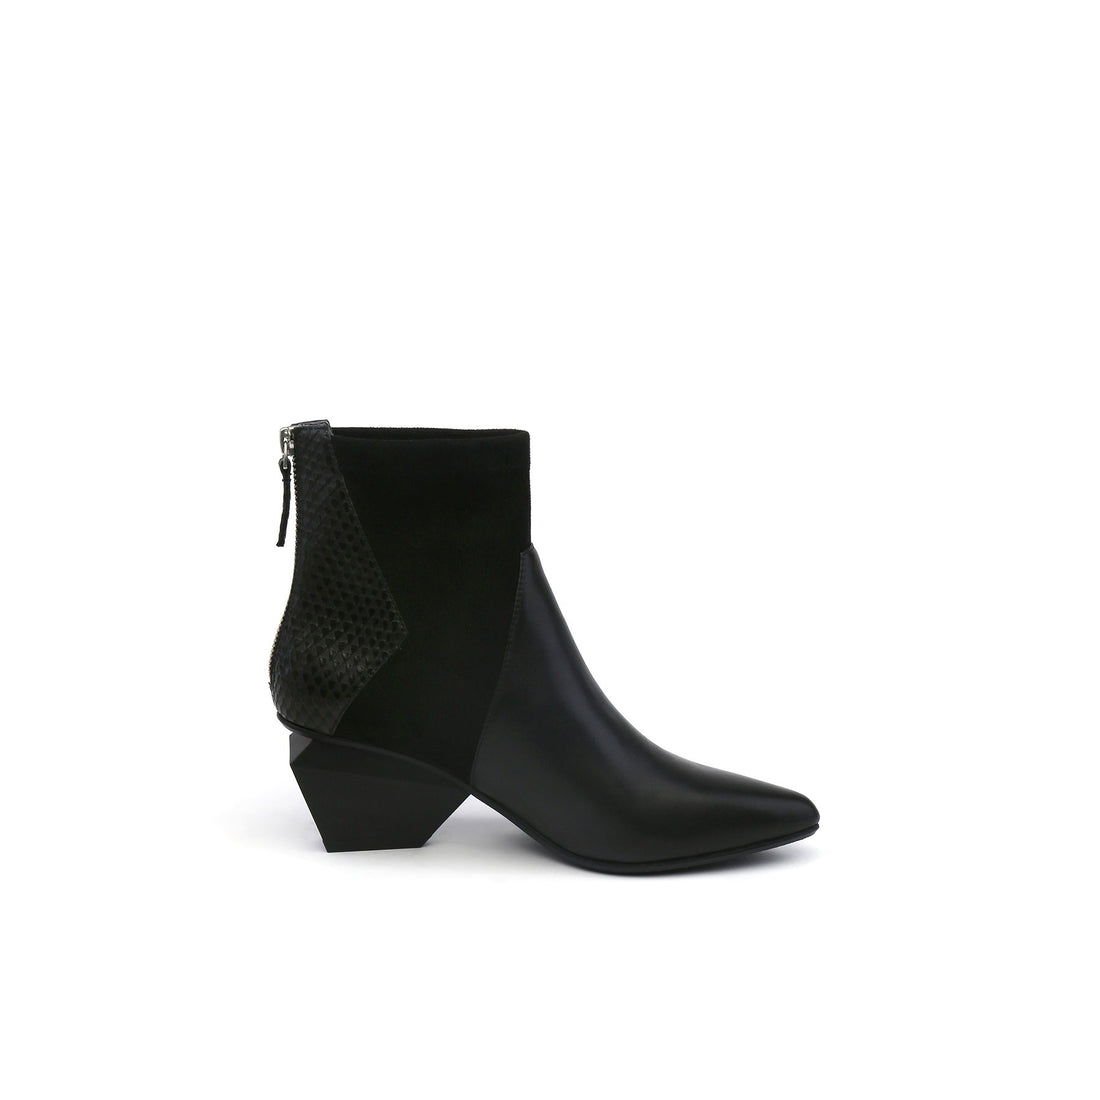 Ankle High Medium Geometrical Heel Faux Leather Black Boots - 0cm